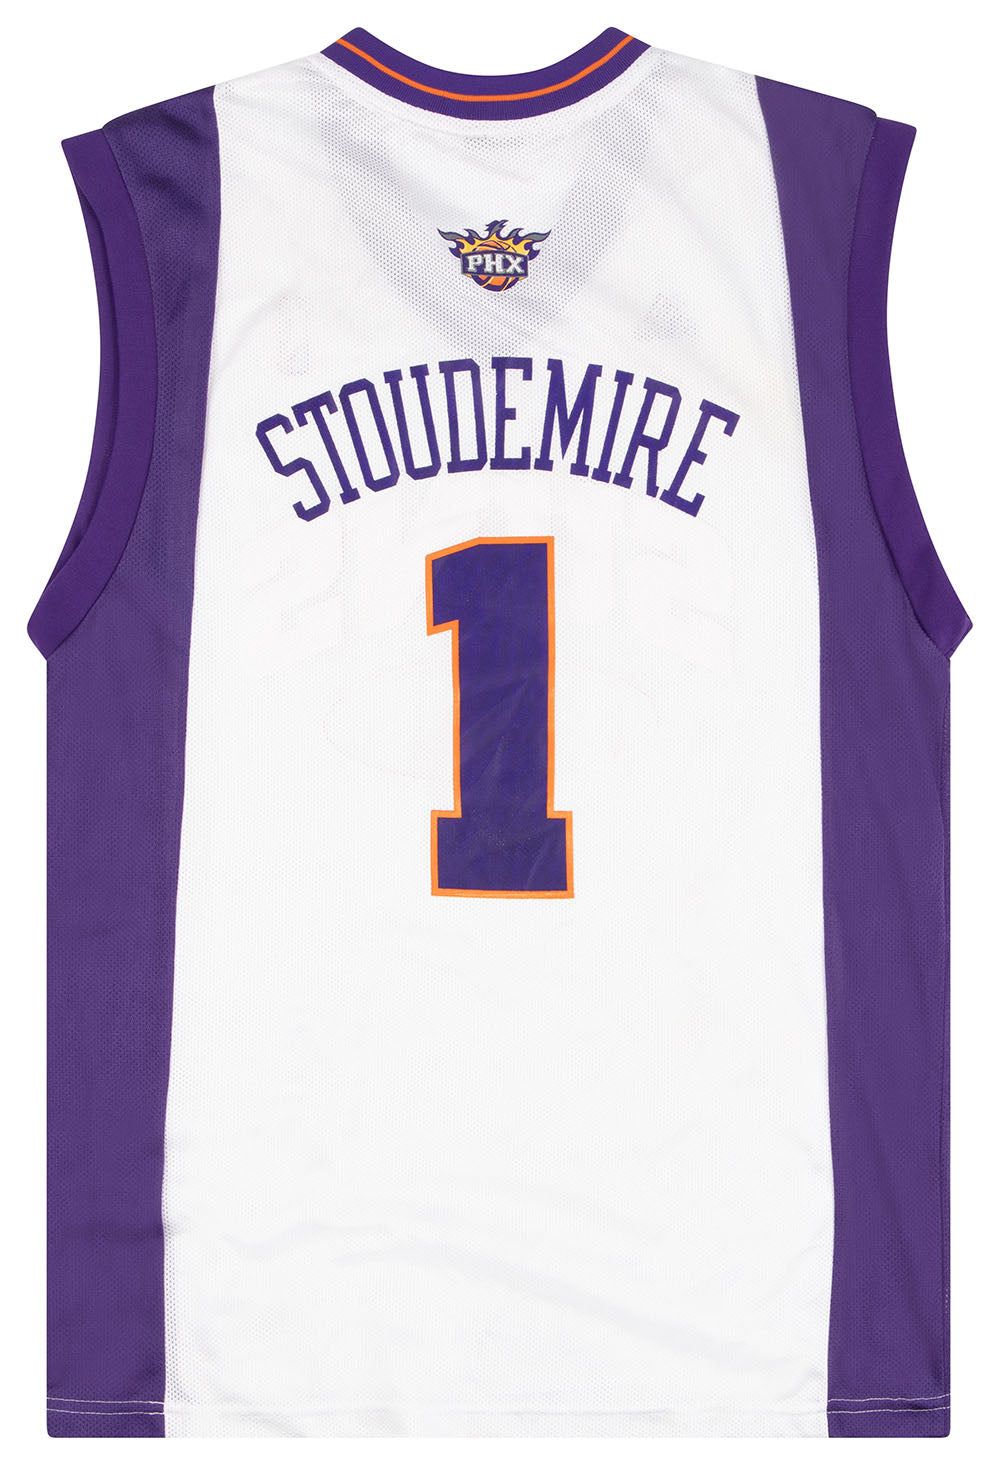 Amare Stoudemire Phoenix Suns Adidas Swingman Jersey Youth Large +2 Length  SEWN